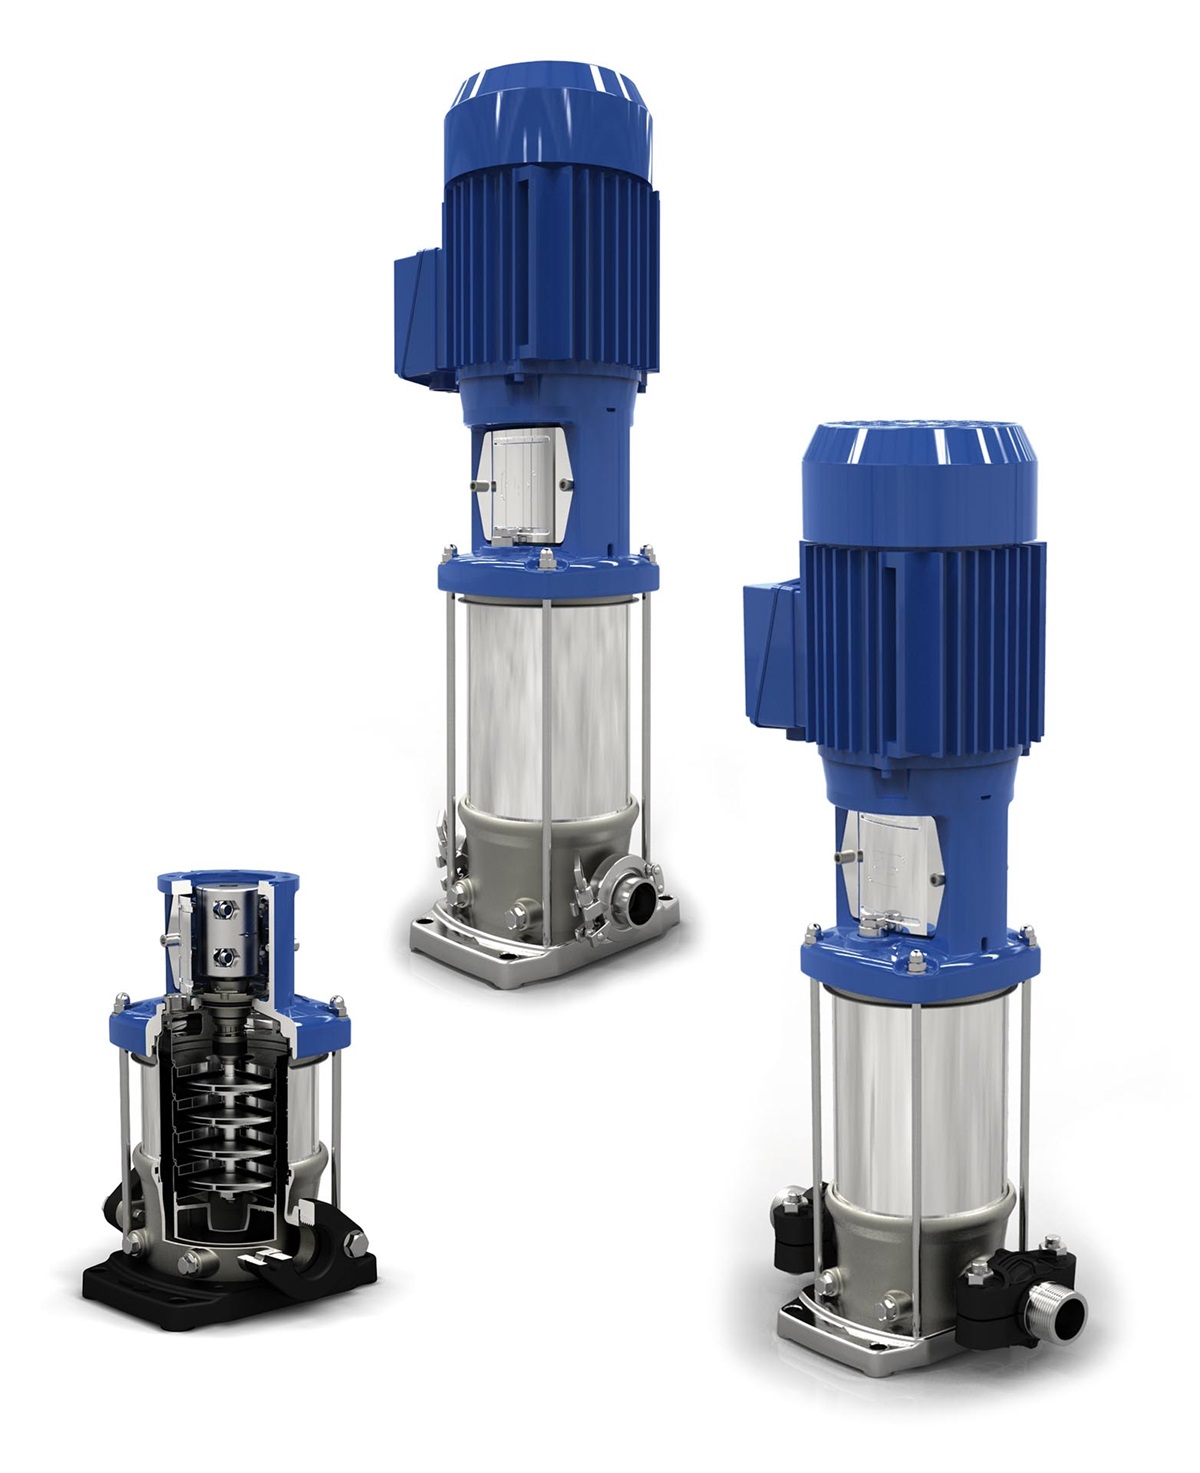 VMS vertical multistage pump range